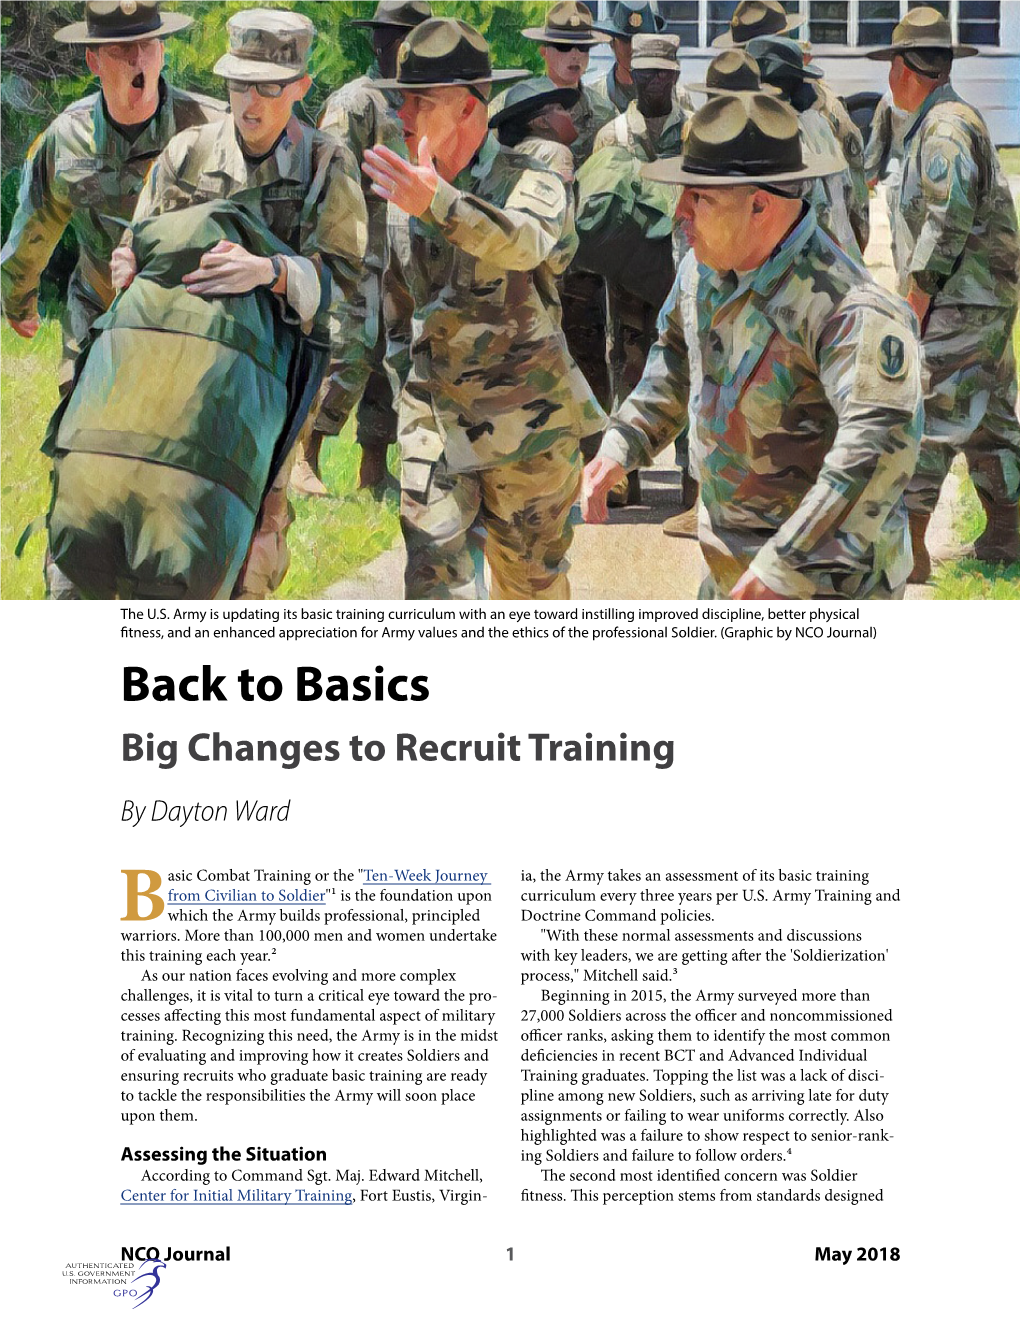 Big Changes to Recruit Training by Dayton Ward